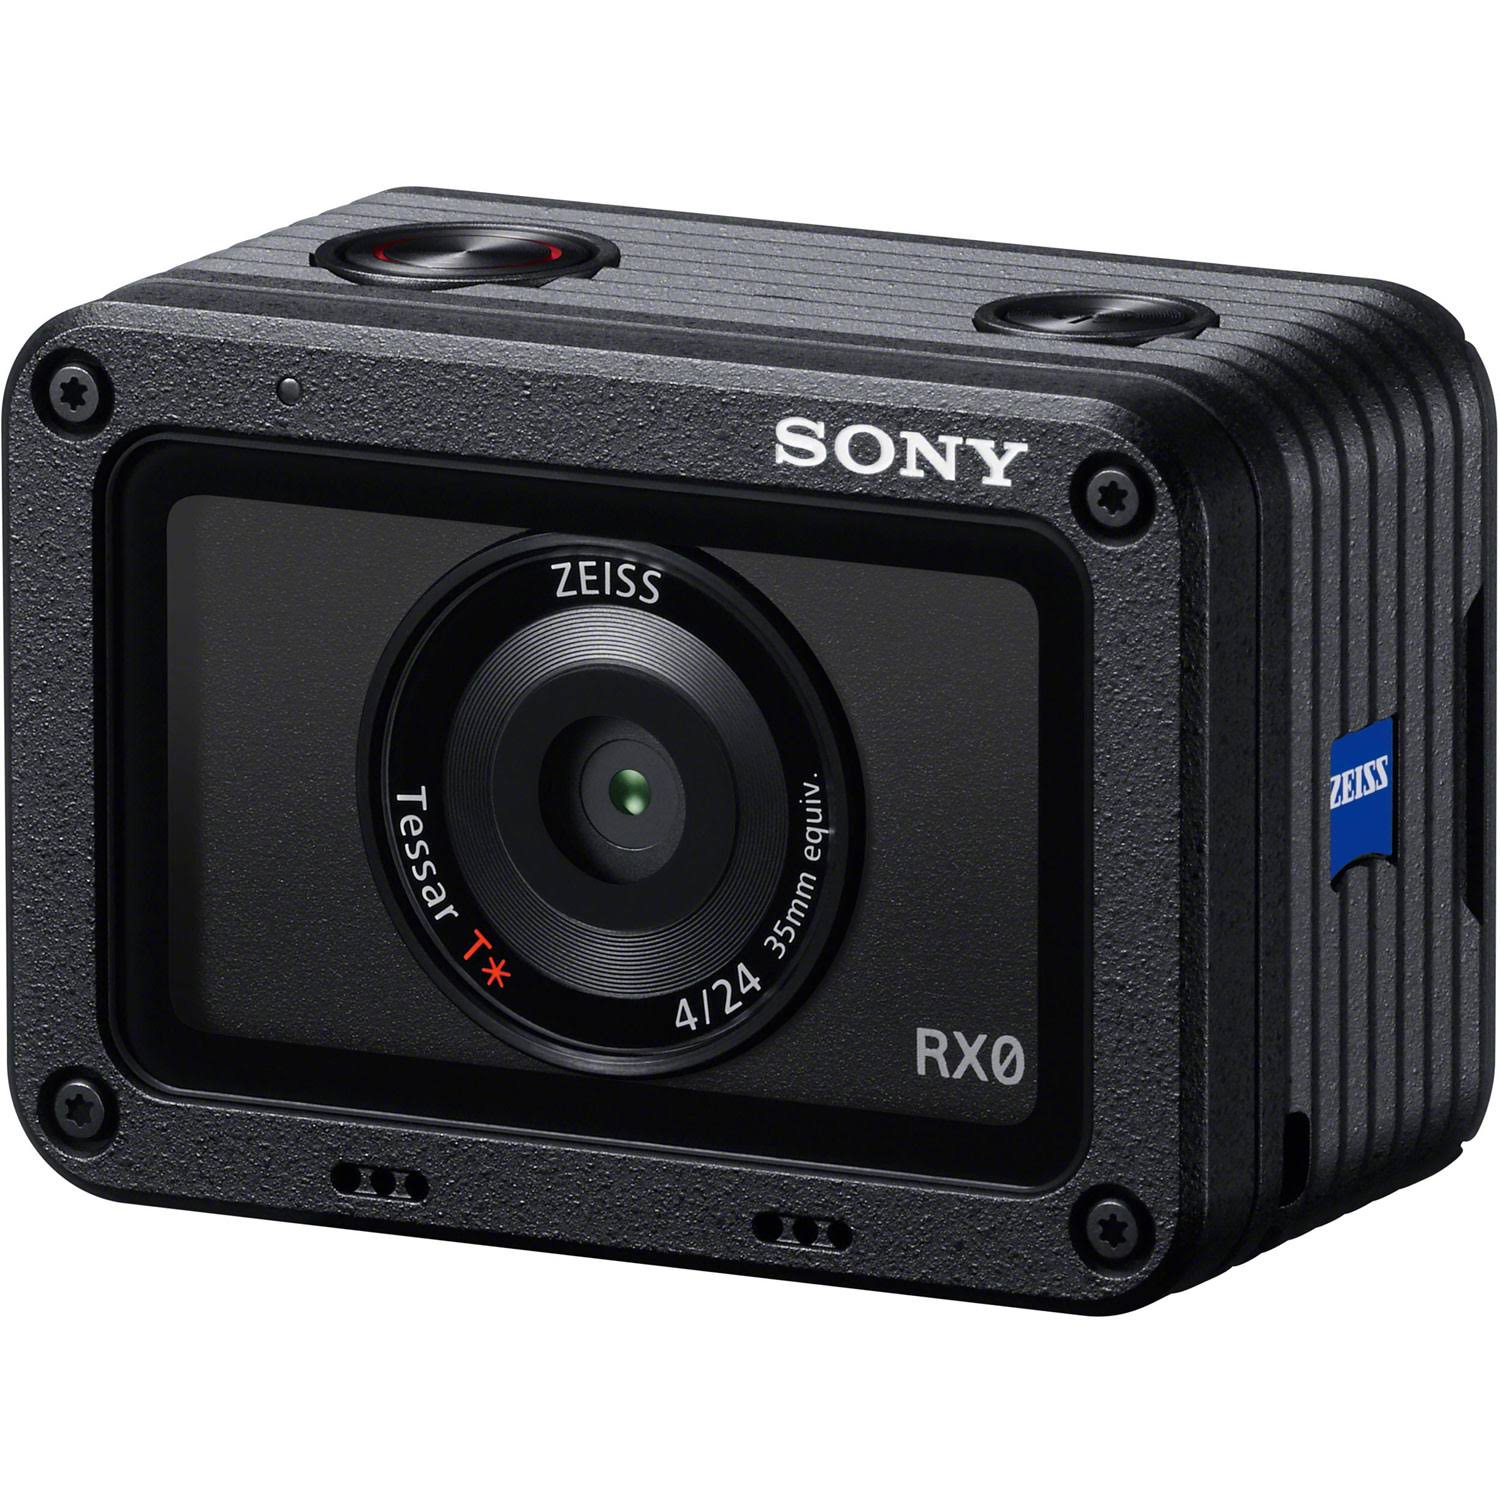  Sony 1.0-प्रकार सेंसर अल्ट्रा-कॉम्पैक्ट कैमरा वाटरप्रूफ और शॉकप्रूफ डिज़ाइन (DSCRX0)...